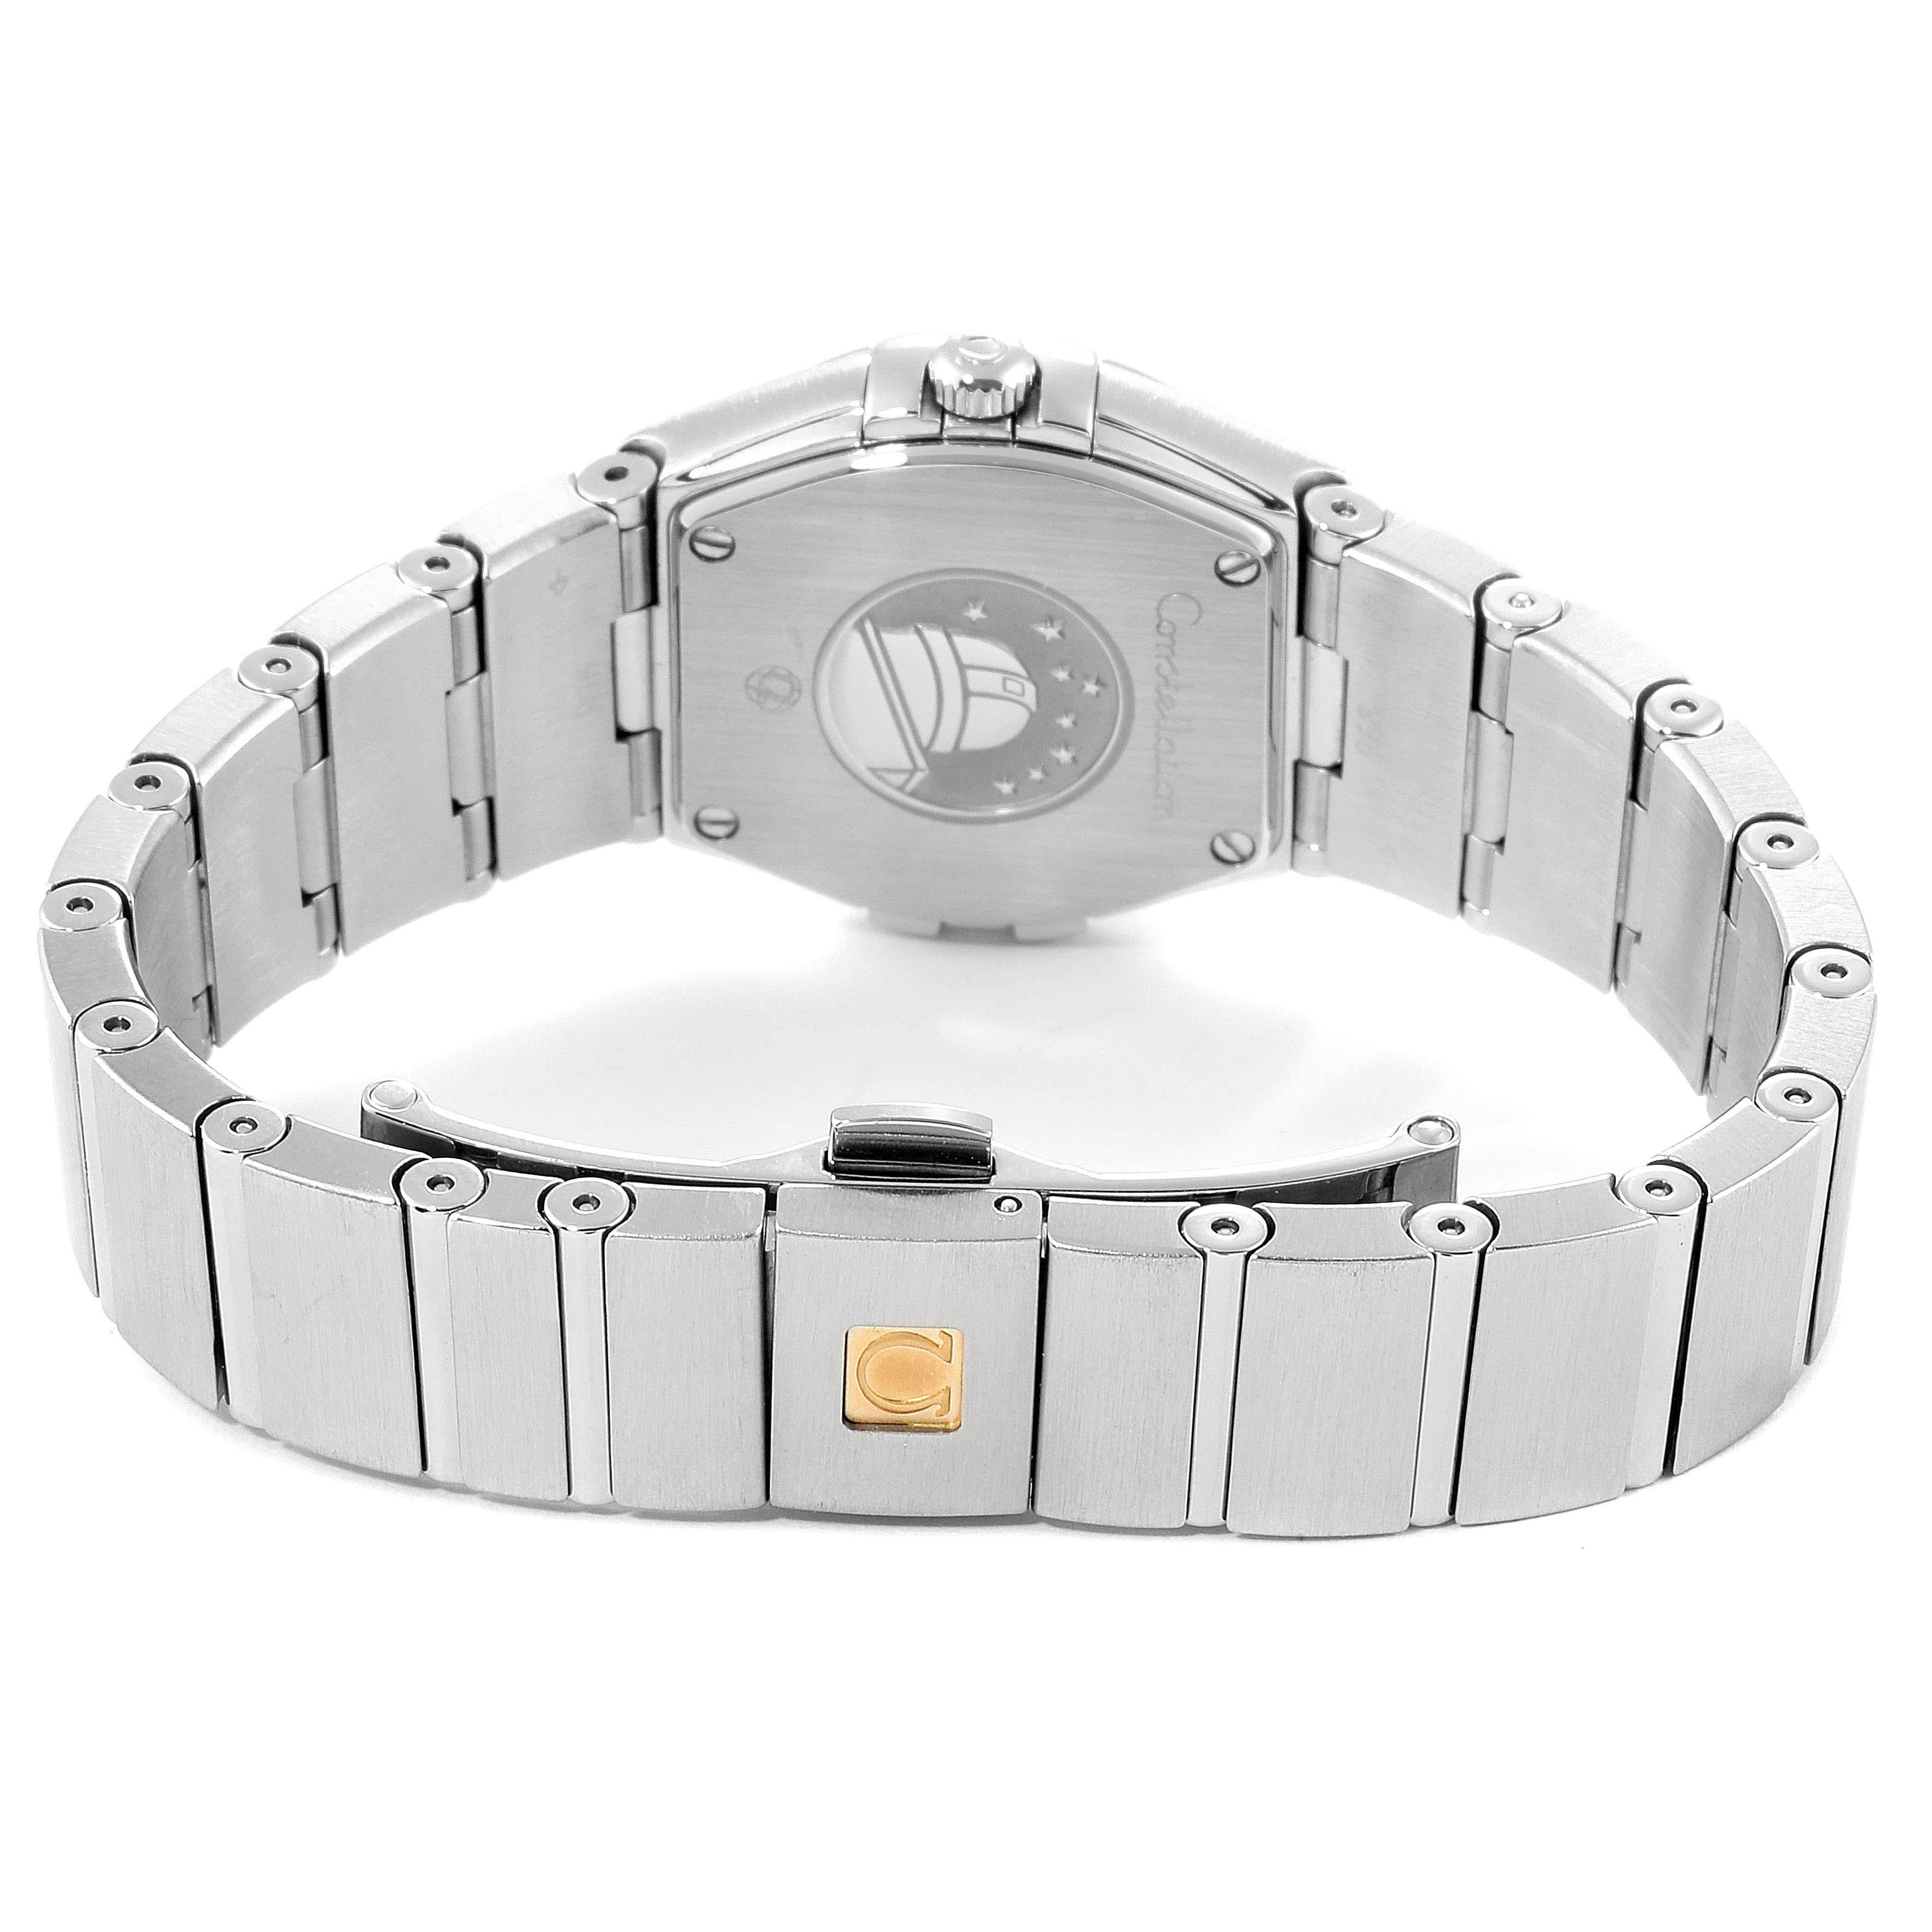 Omega Constellation Diamond Ladies Watch 123.15.24.60.52.001 For Sale 1